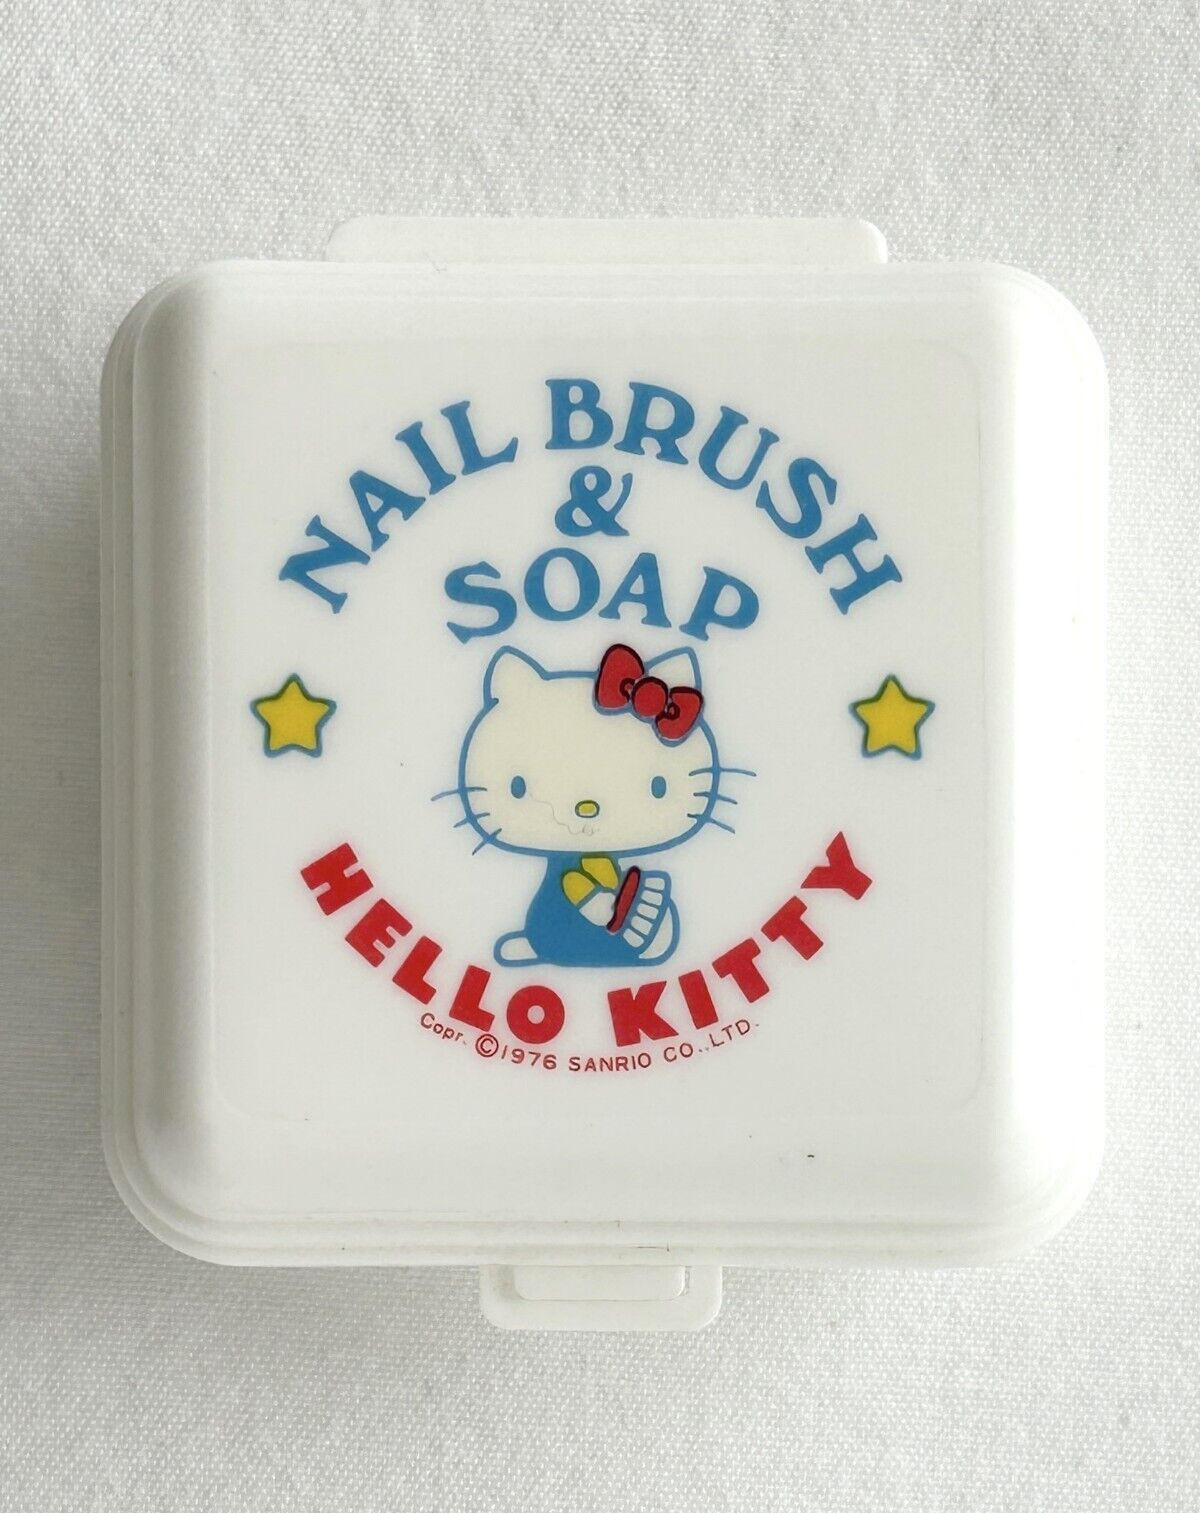 Vintage 1976 SANRIO Hello Kitty Soap Set and Case Nail Brush Missing White